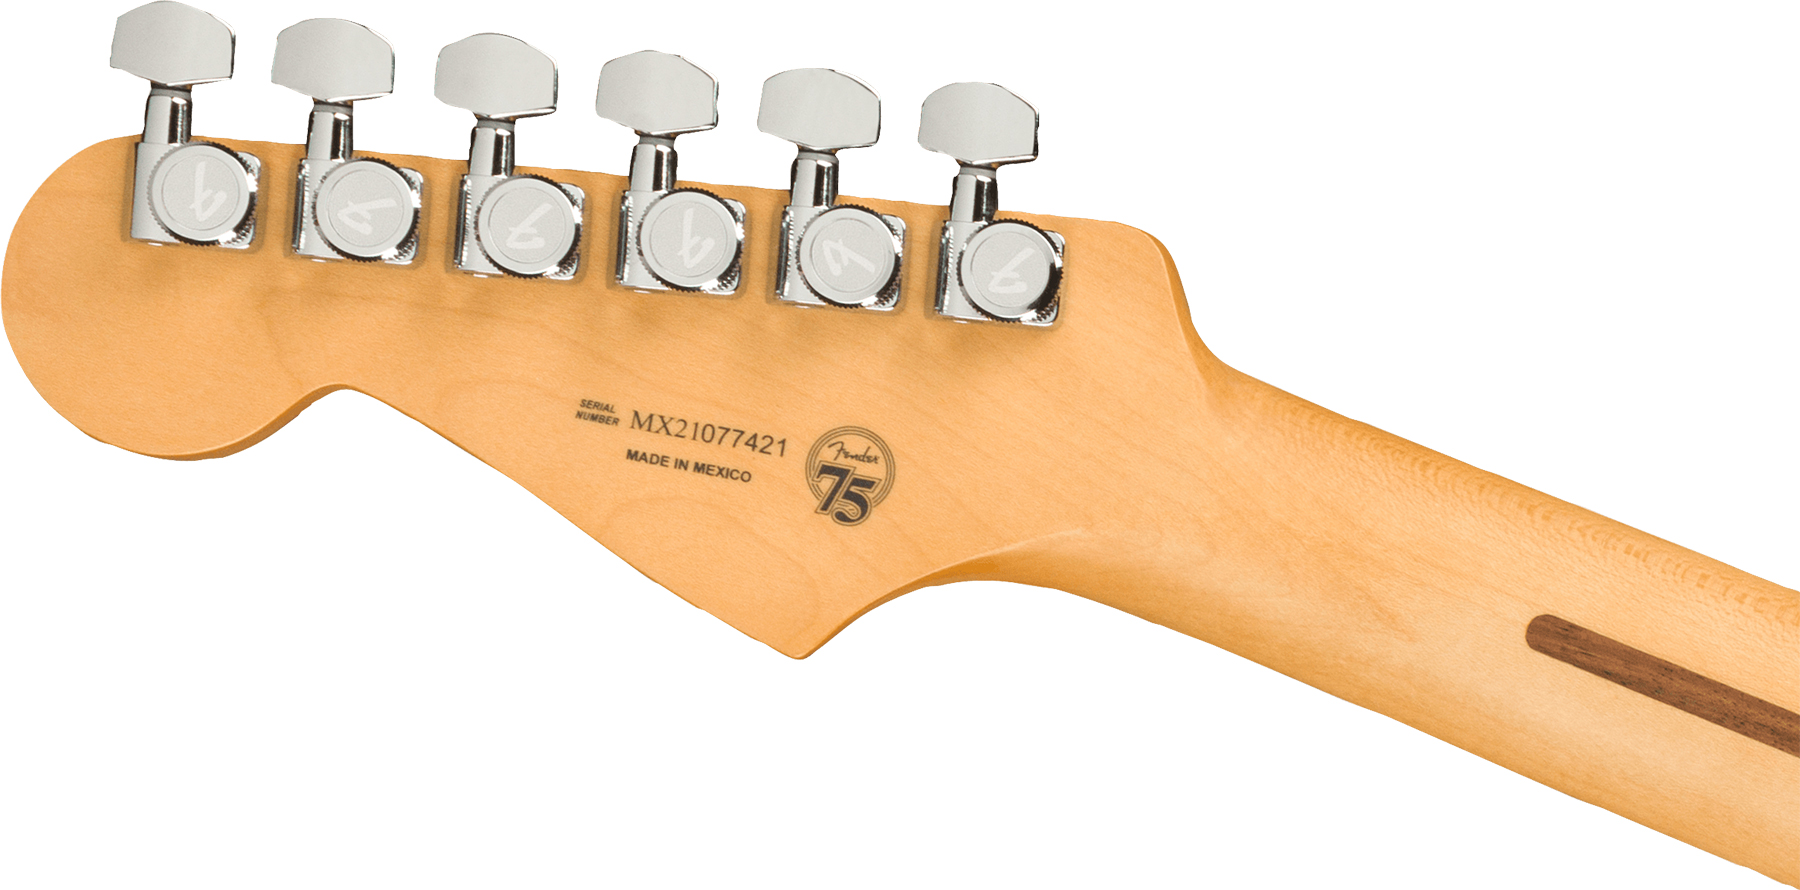 Fender Strat Player Plus Mex Hss Trem Pf - Belair Blue - Str shape electric guitar - Variation 3